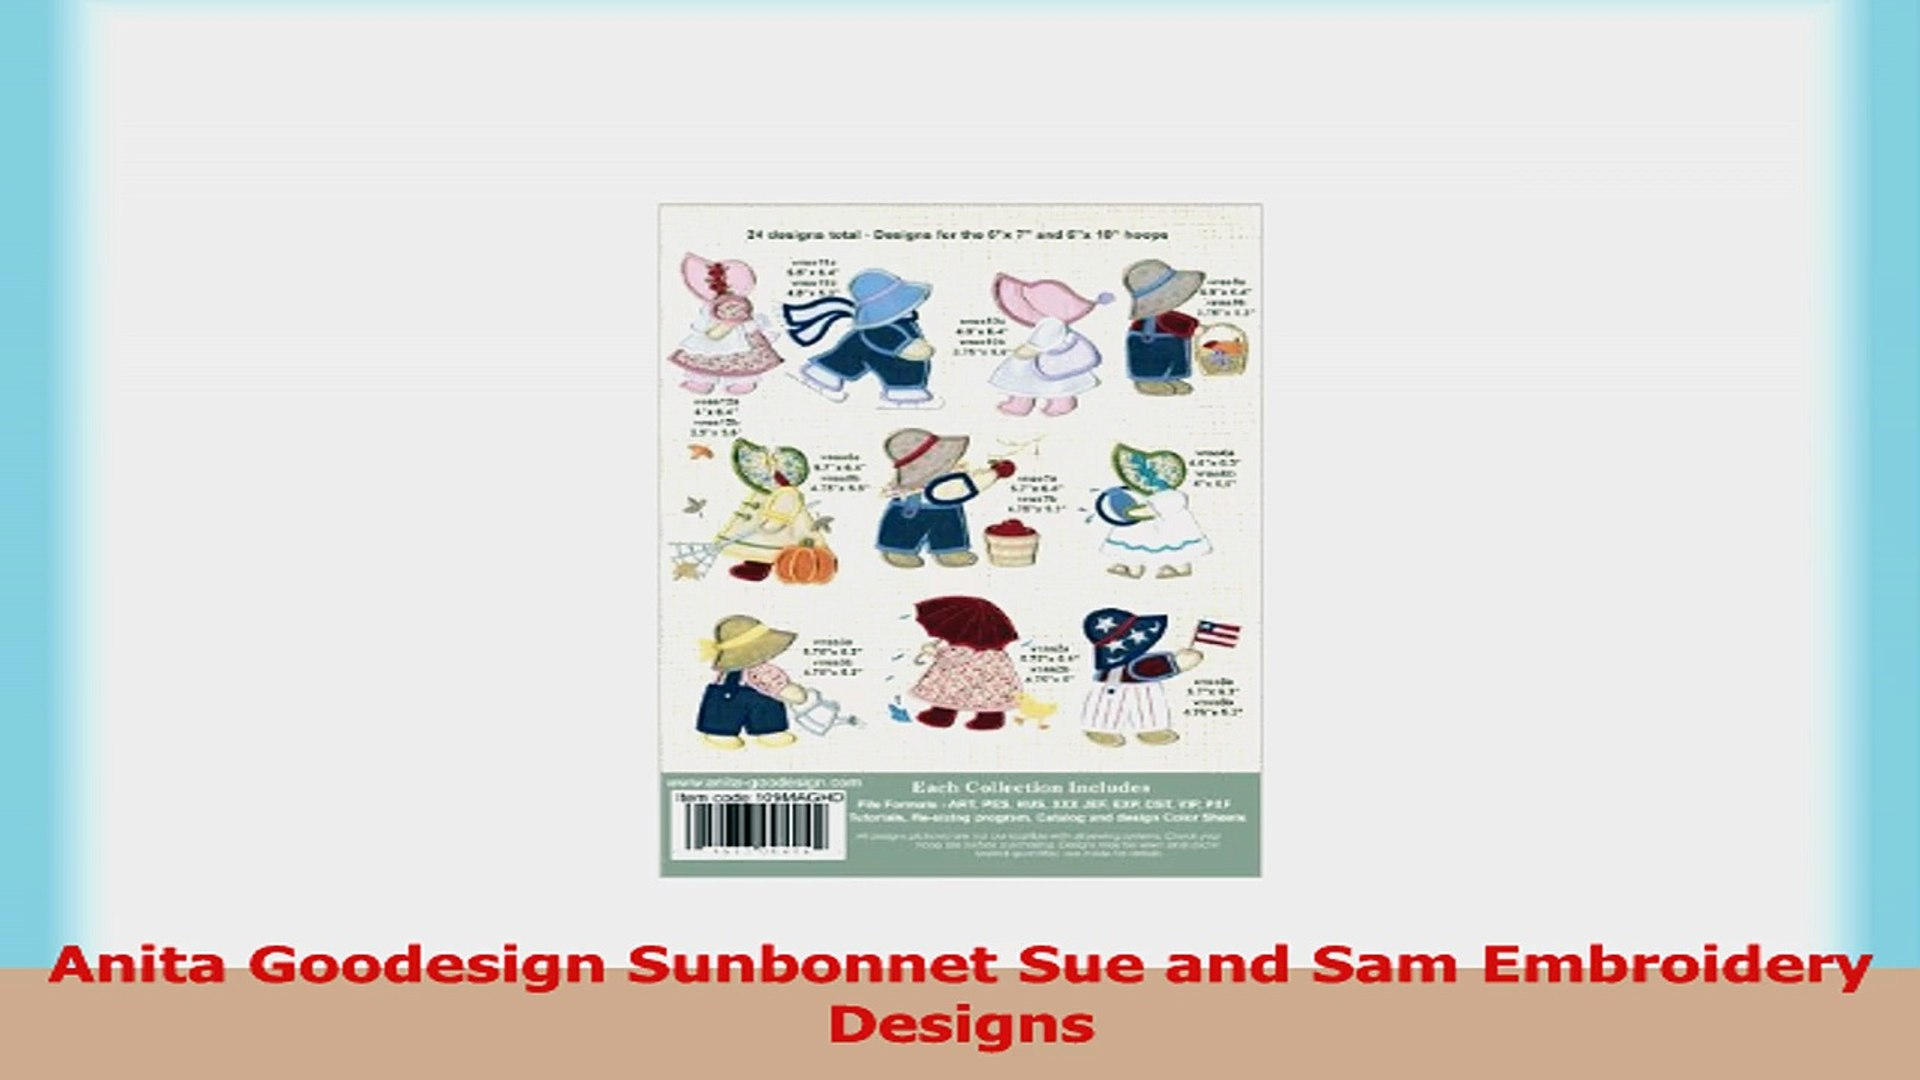 Sunbonnet Sue Embroidery Patterns Free Anita Goodesign Sunbonnet Sue And Sam Embroidery Designs 7e0f7823